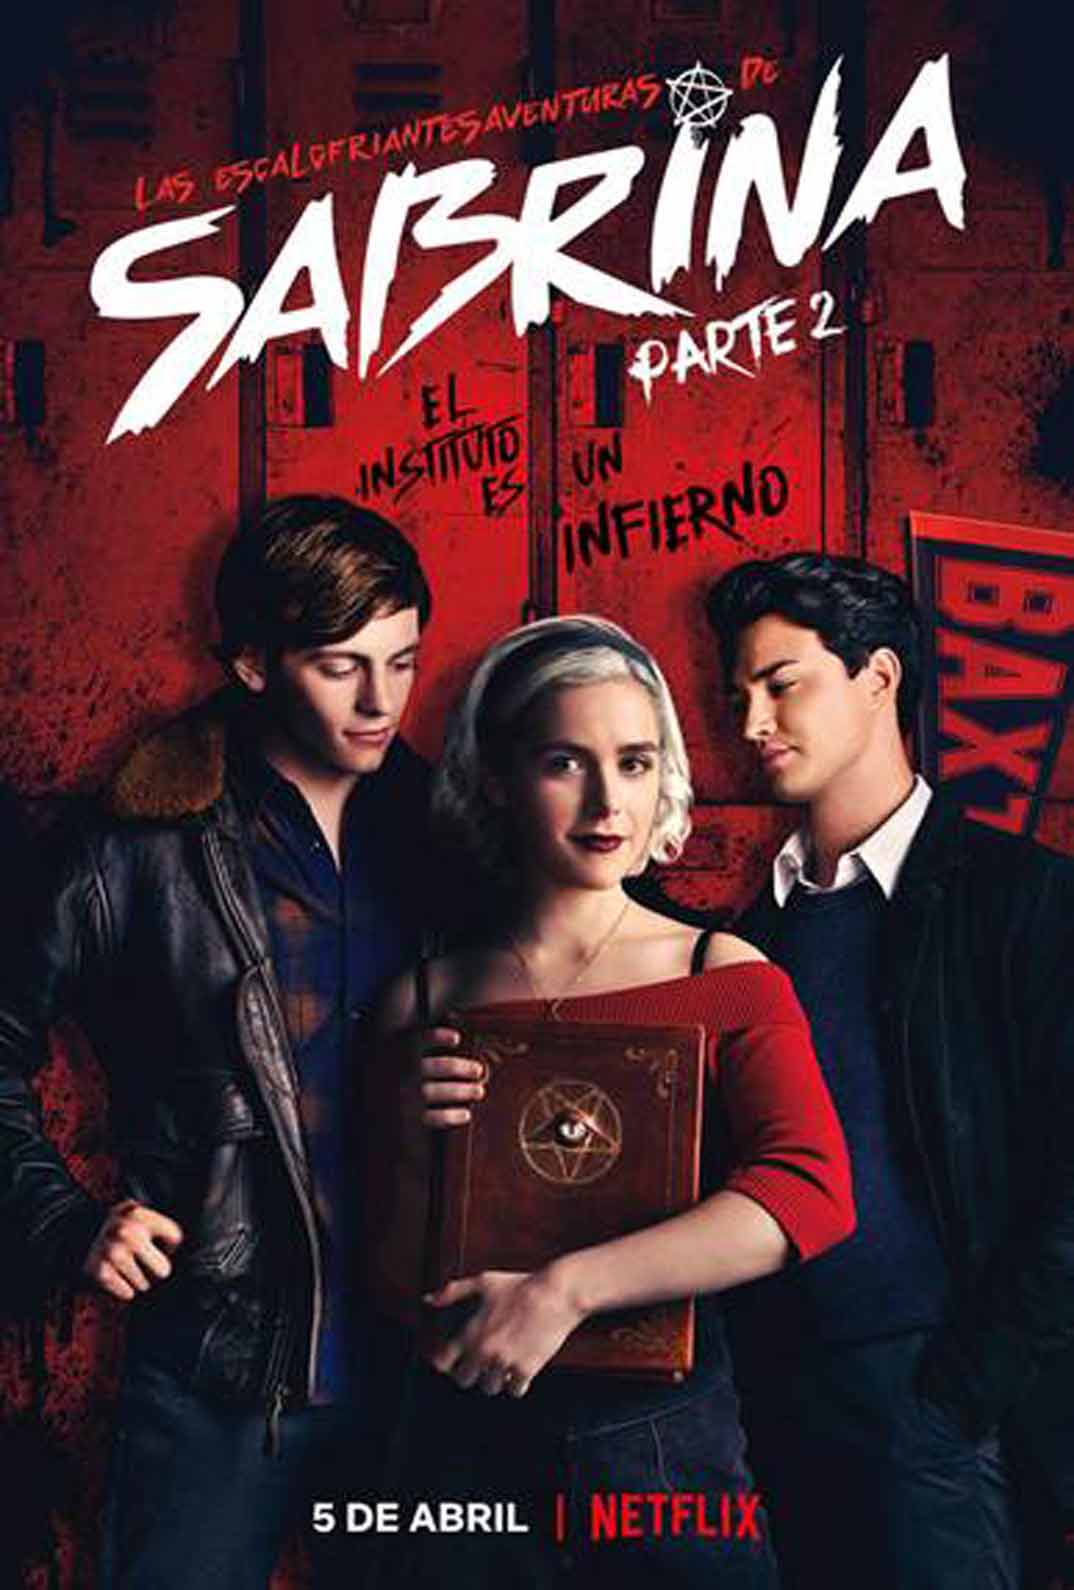 Las escalofriantes aventuras de Sabrina - Parte 2 © Netflix